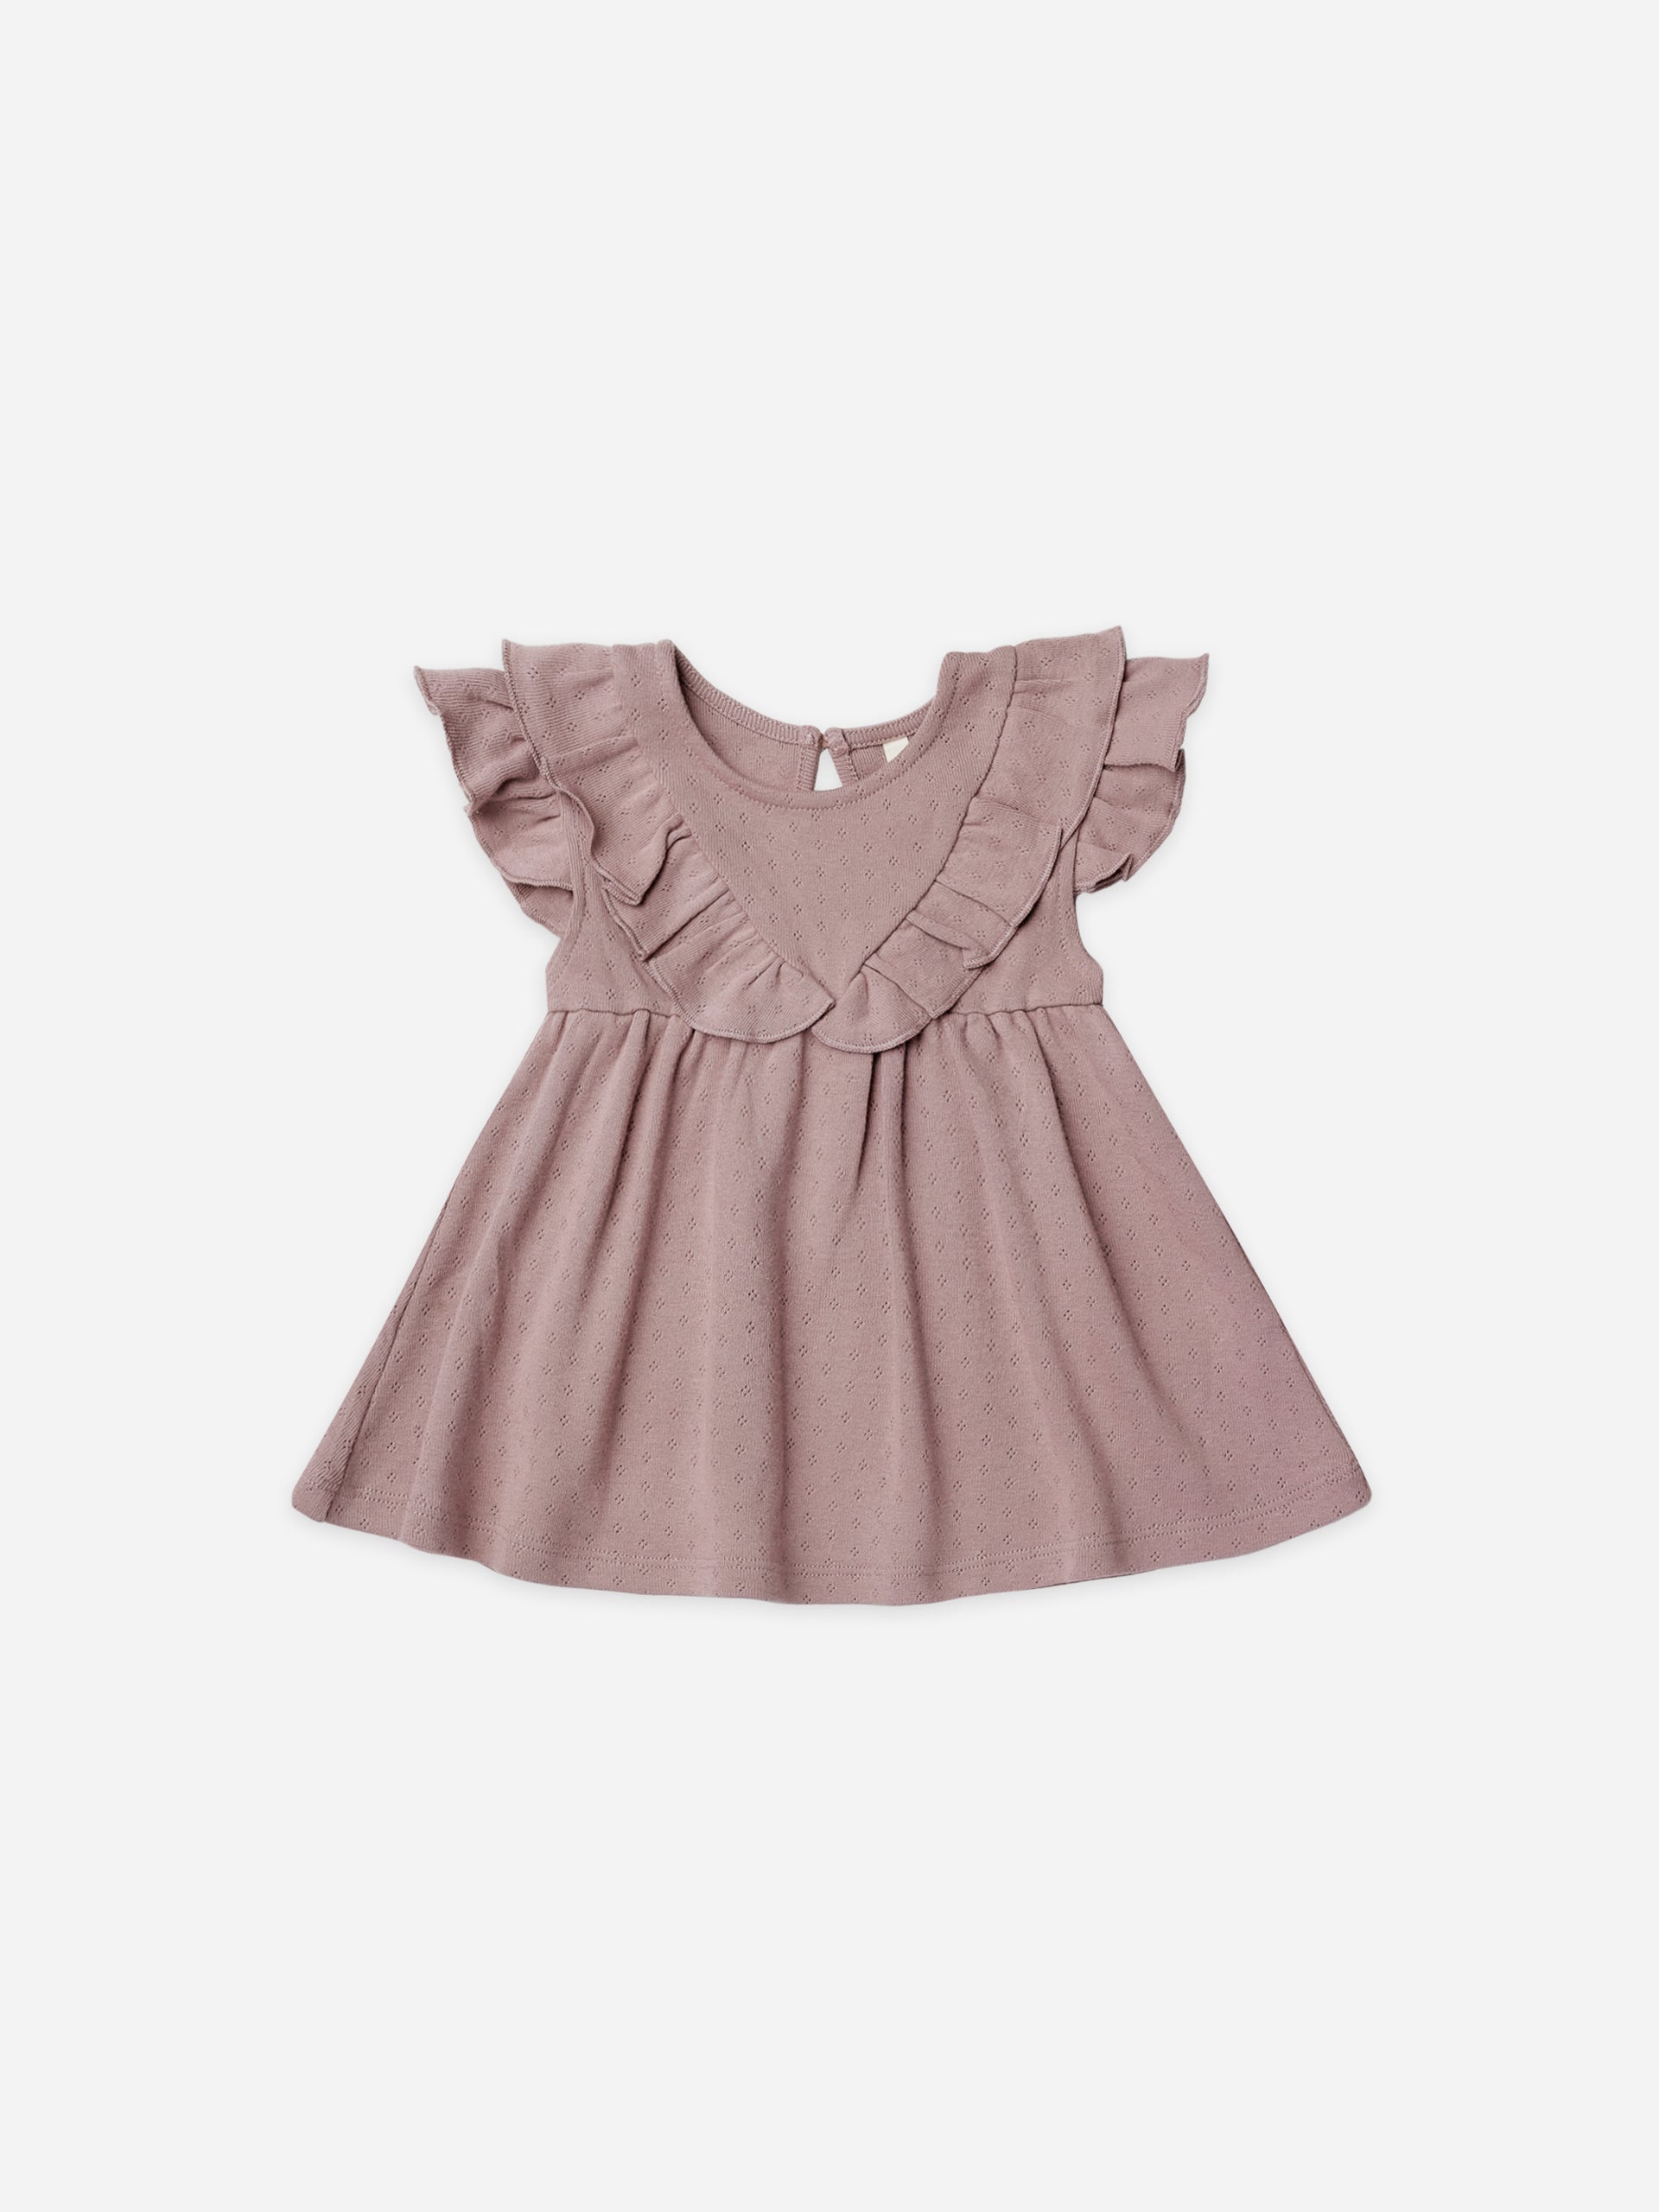 Pointelle dress and organic cotton leggings set - Baby Girl